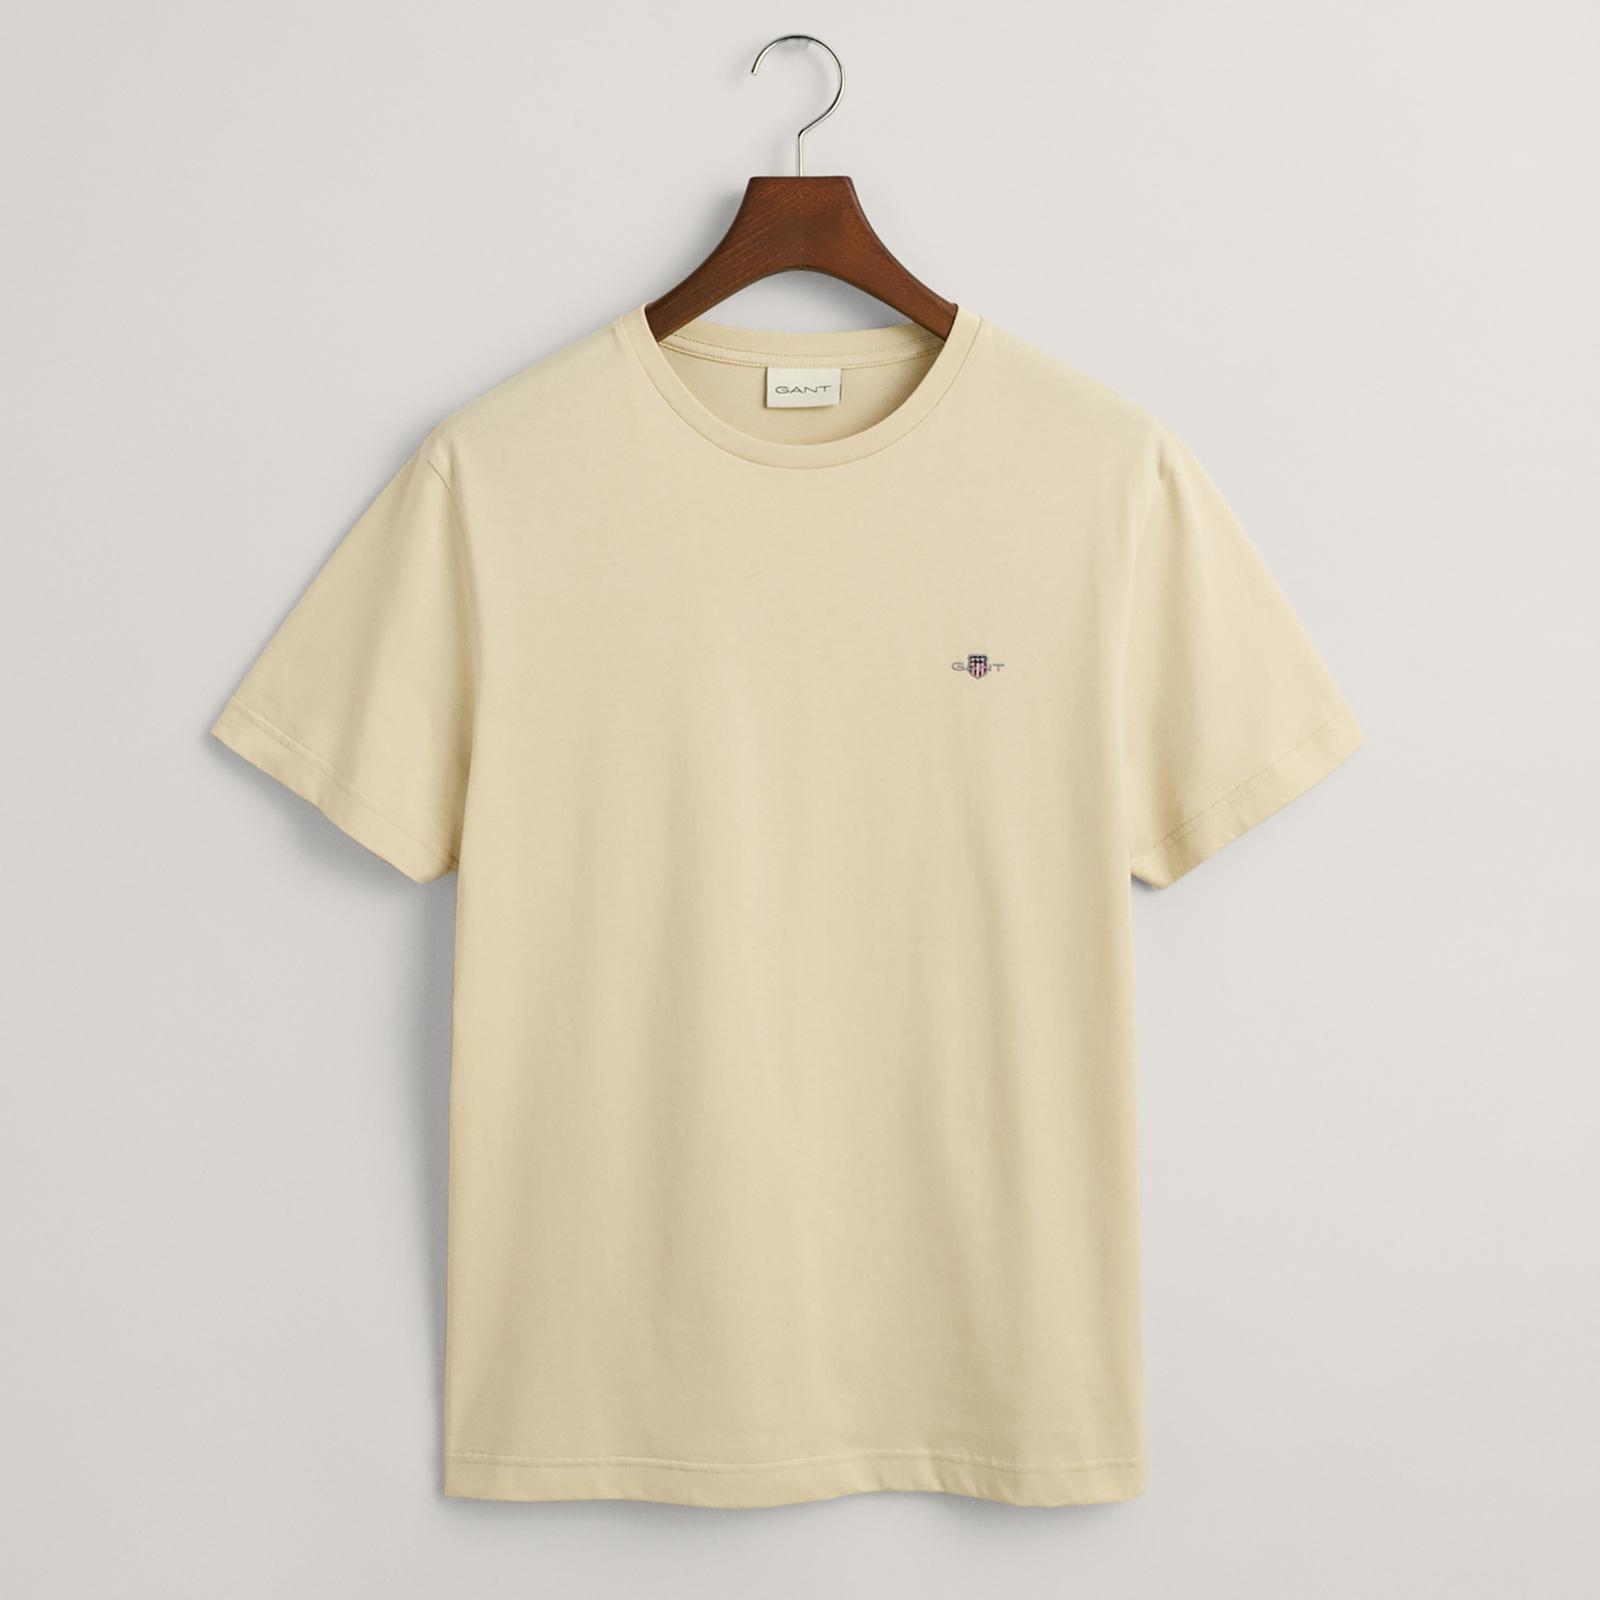 Natural Lyst for Logo | T-shirt in Men Cotton GANT Shield